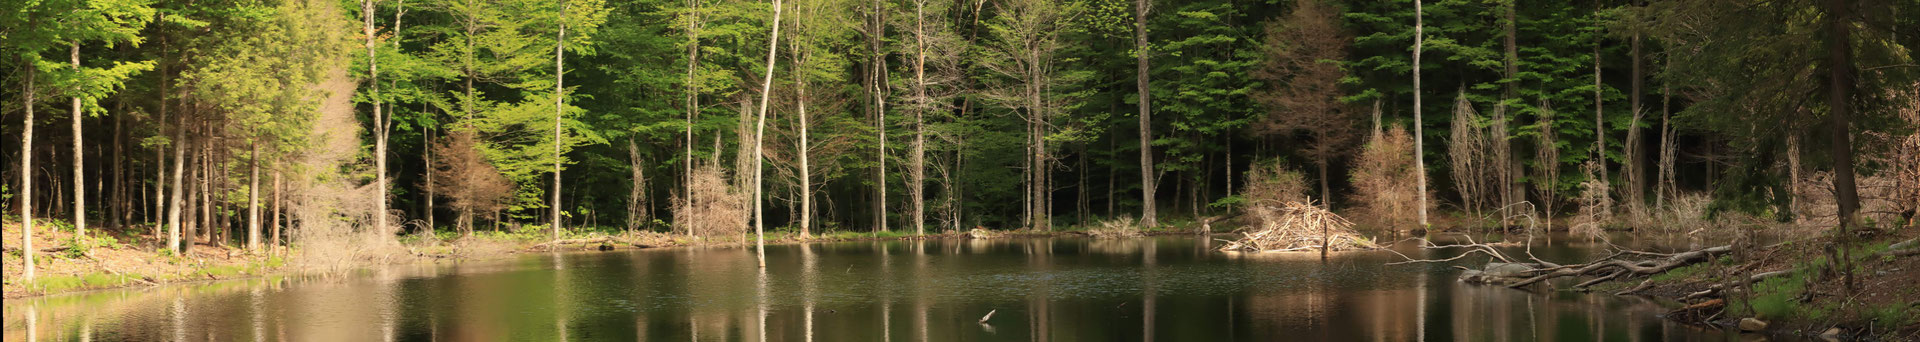 L'étang du Castor. Buck Mountain, NY, USA. Canon EOS 80D, EF 70-300mm f/4-5.6 IS II USM à 76mm, f/11, 1/100 s, 1250 ISO